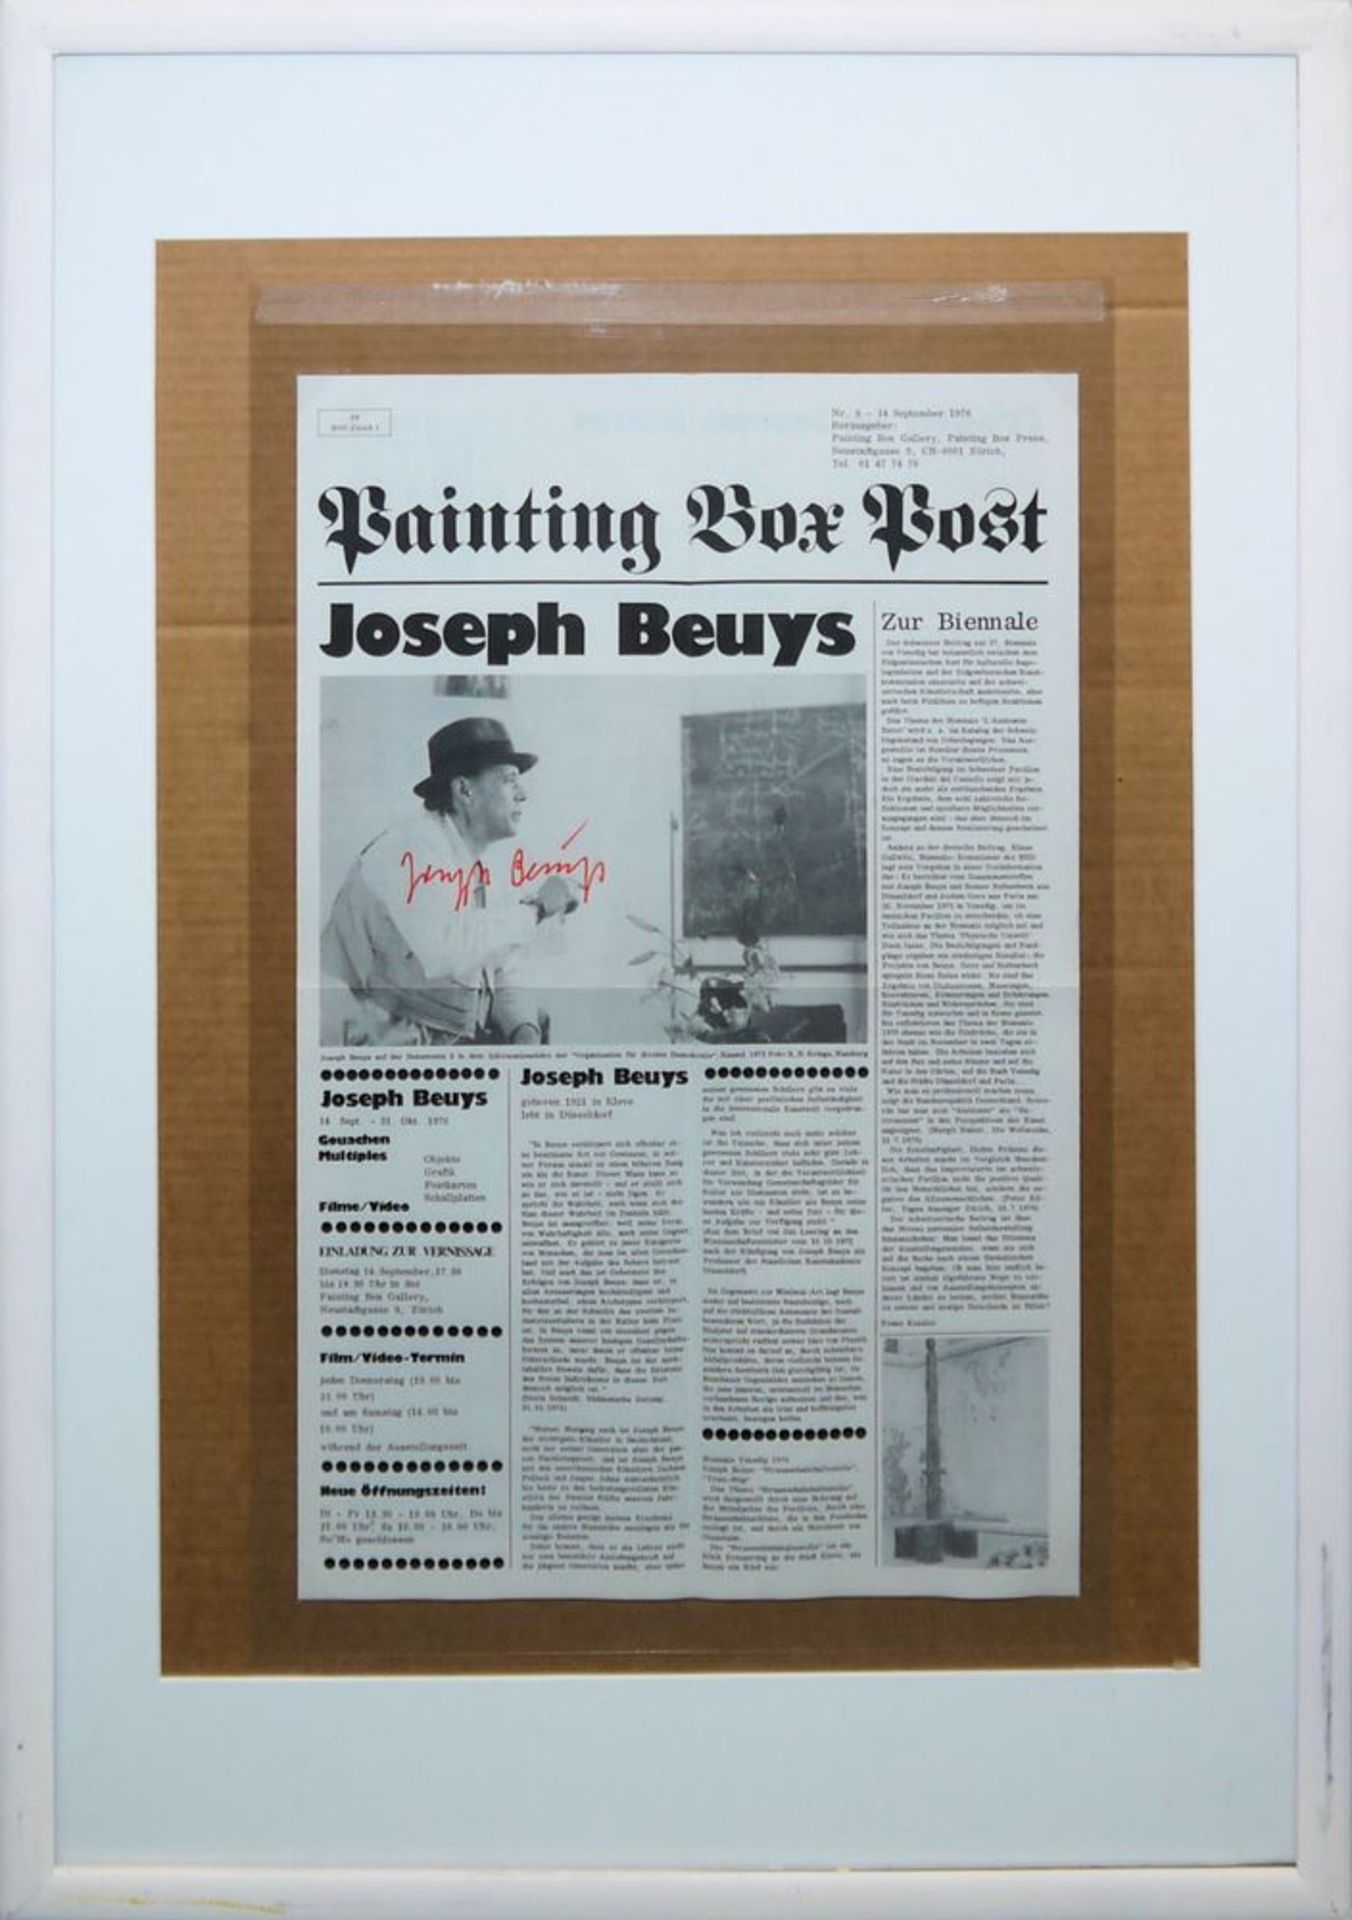 Joseph Beuys, "Painting Box Post", signierte Offsetgraphik, Zürich 1976, gerahmt